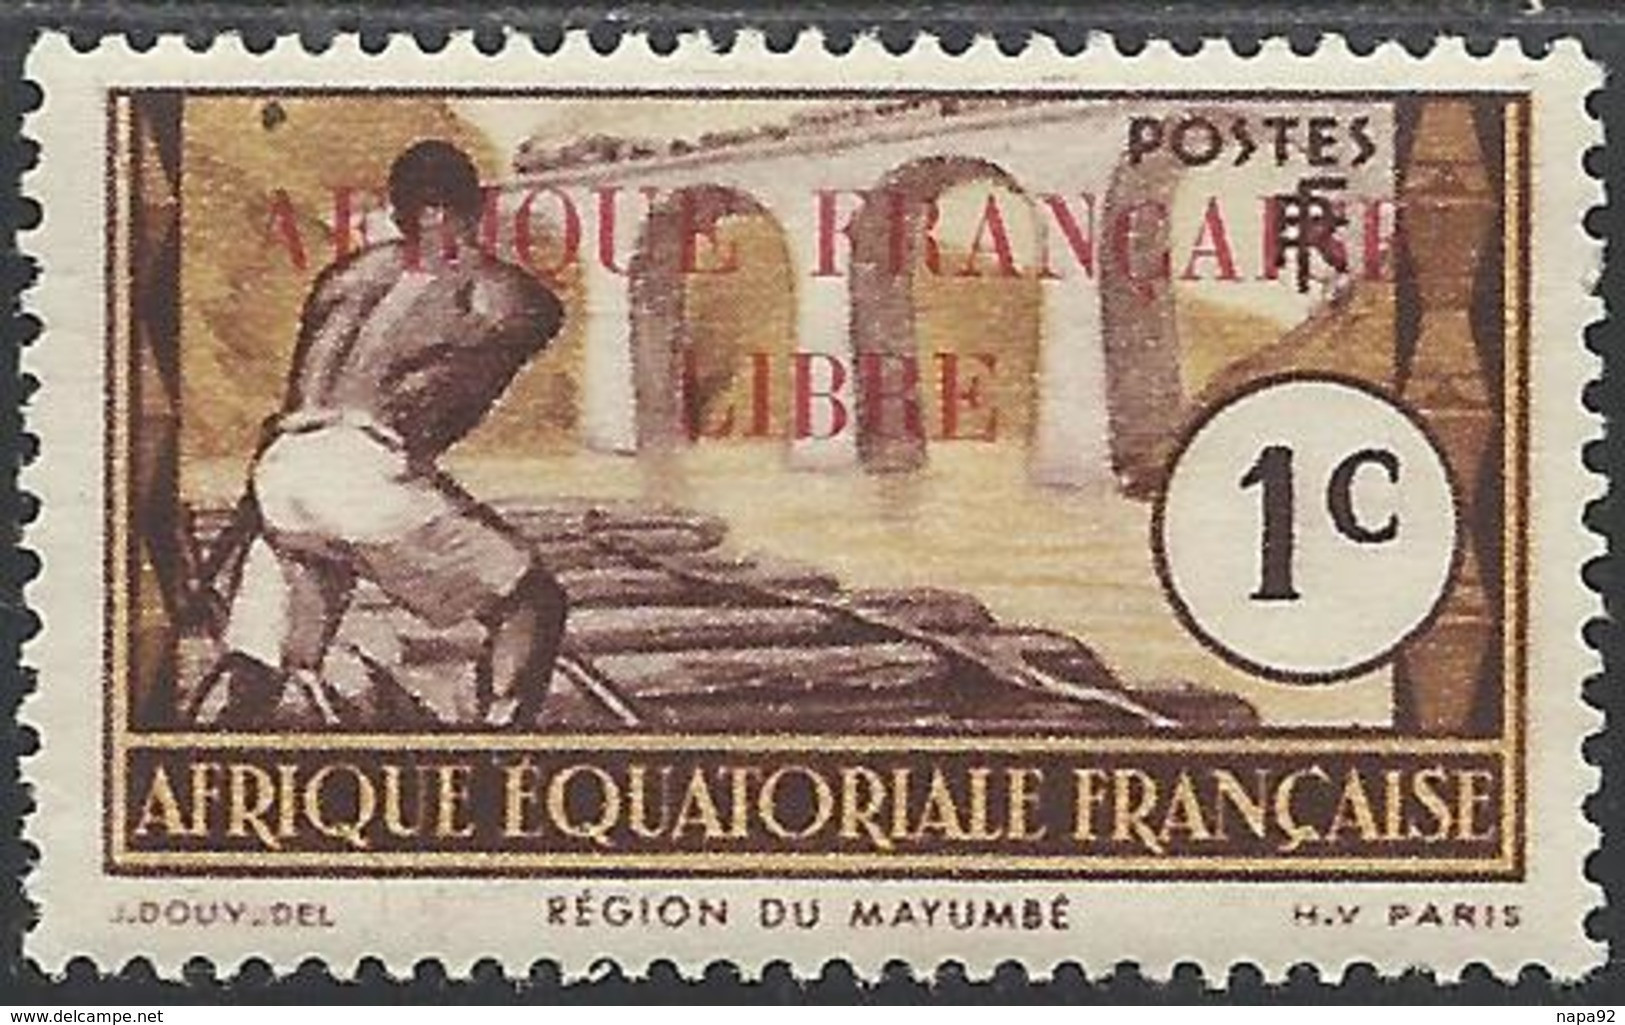 AFRIQUE EQUATORIALE FRANCAISE - AEF - A.E.F. - 1940 - YT 92** - Unused Stamps